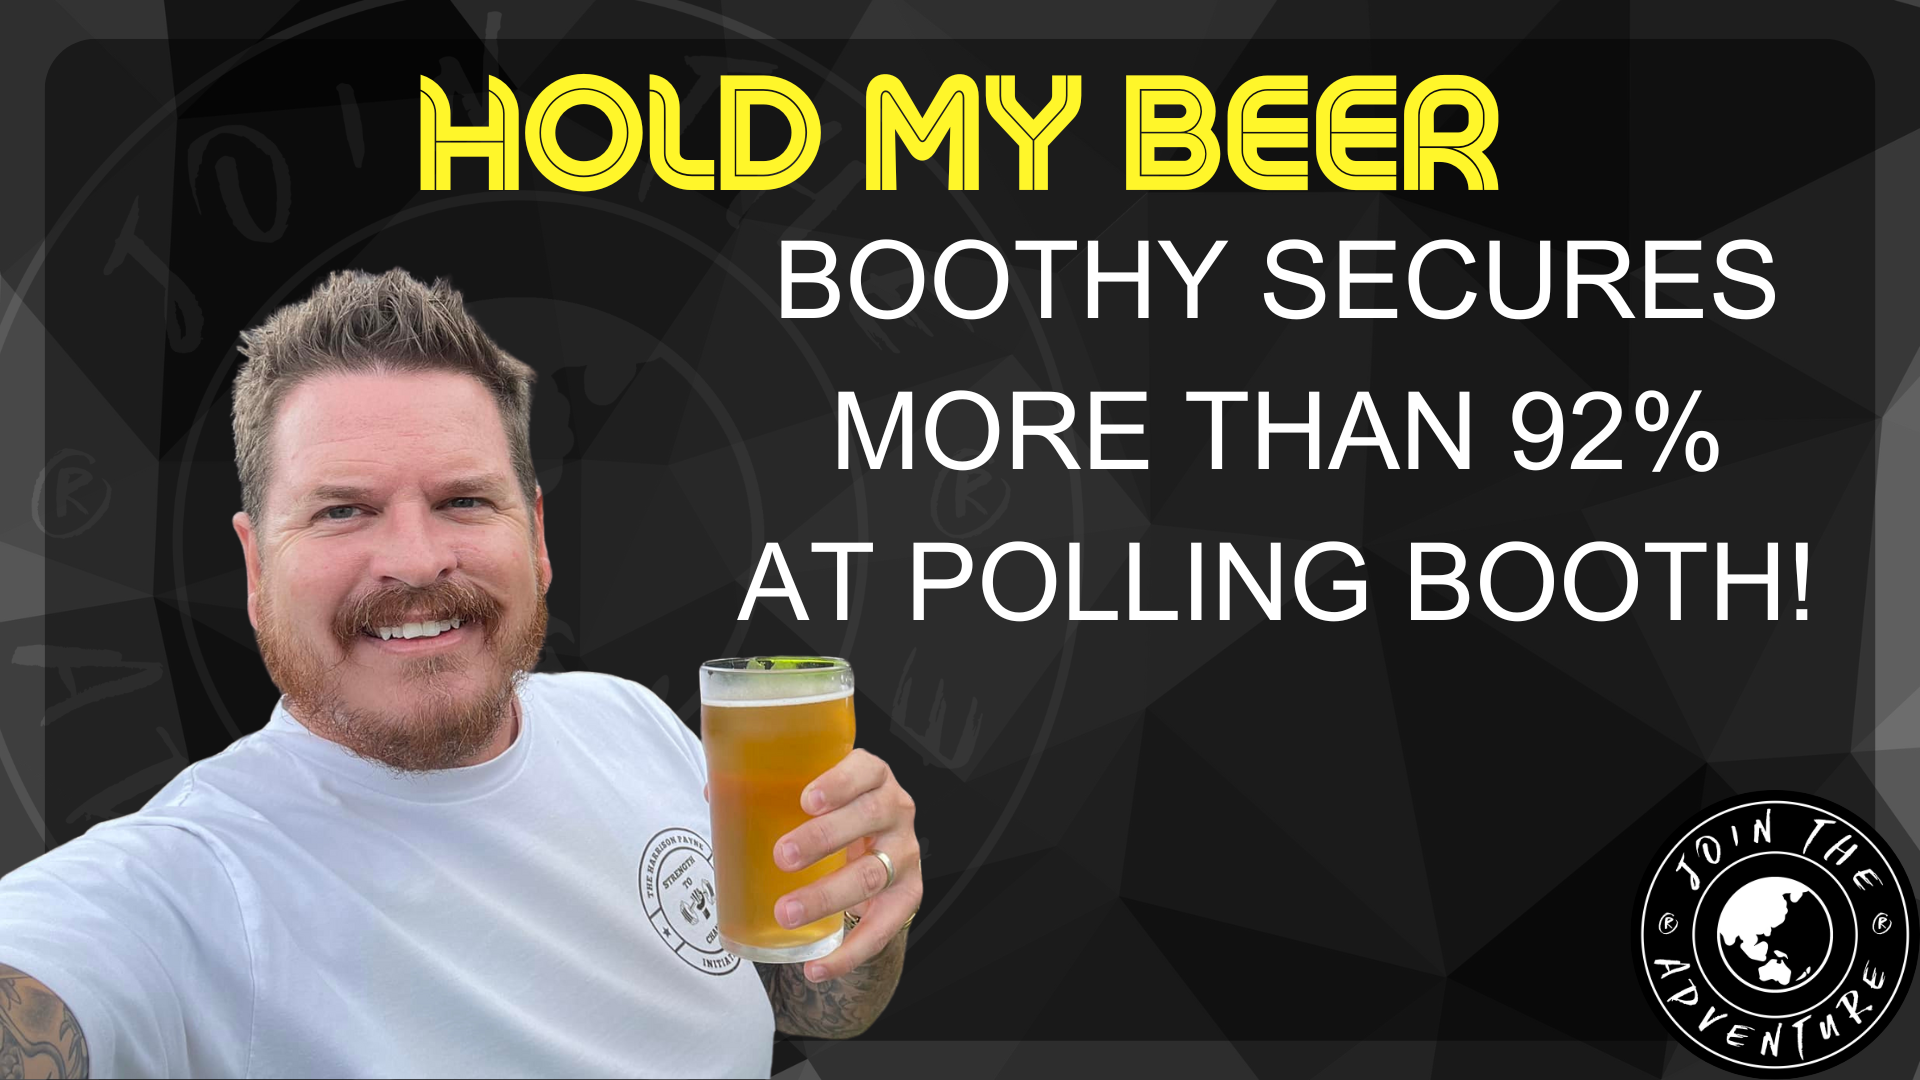 Boothy Beer Mandate Secured at 92%